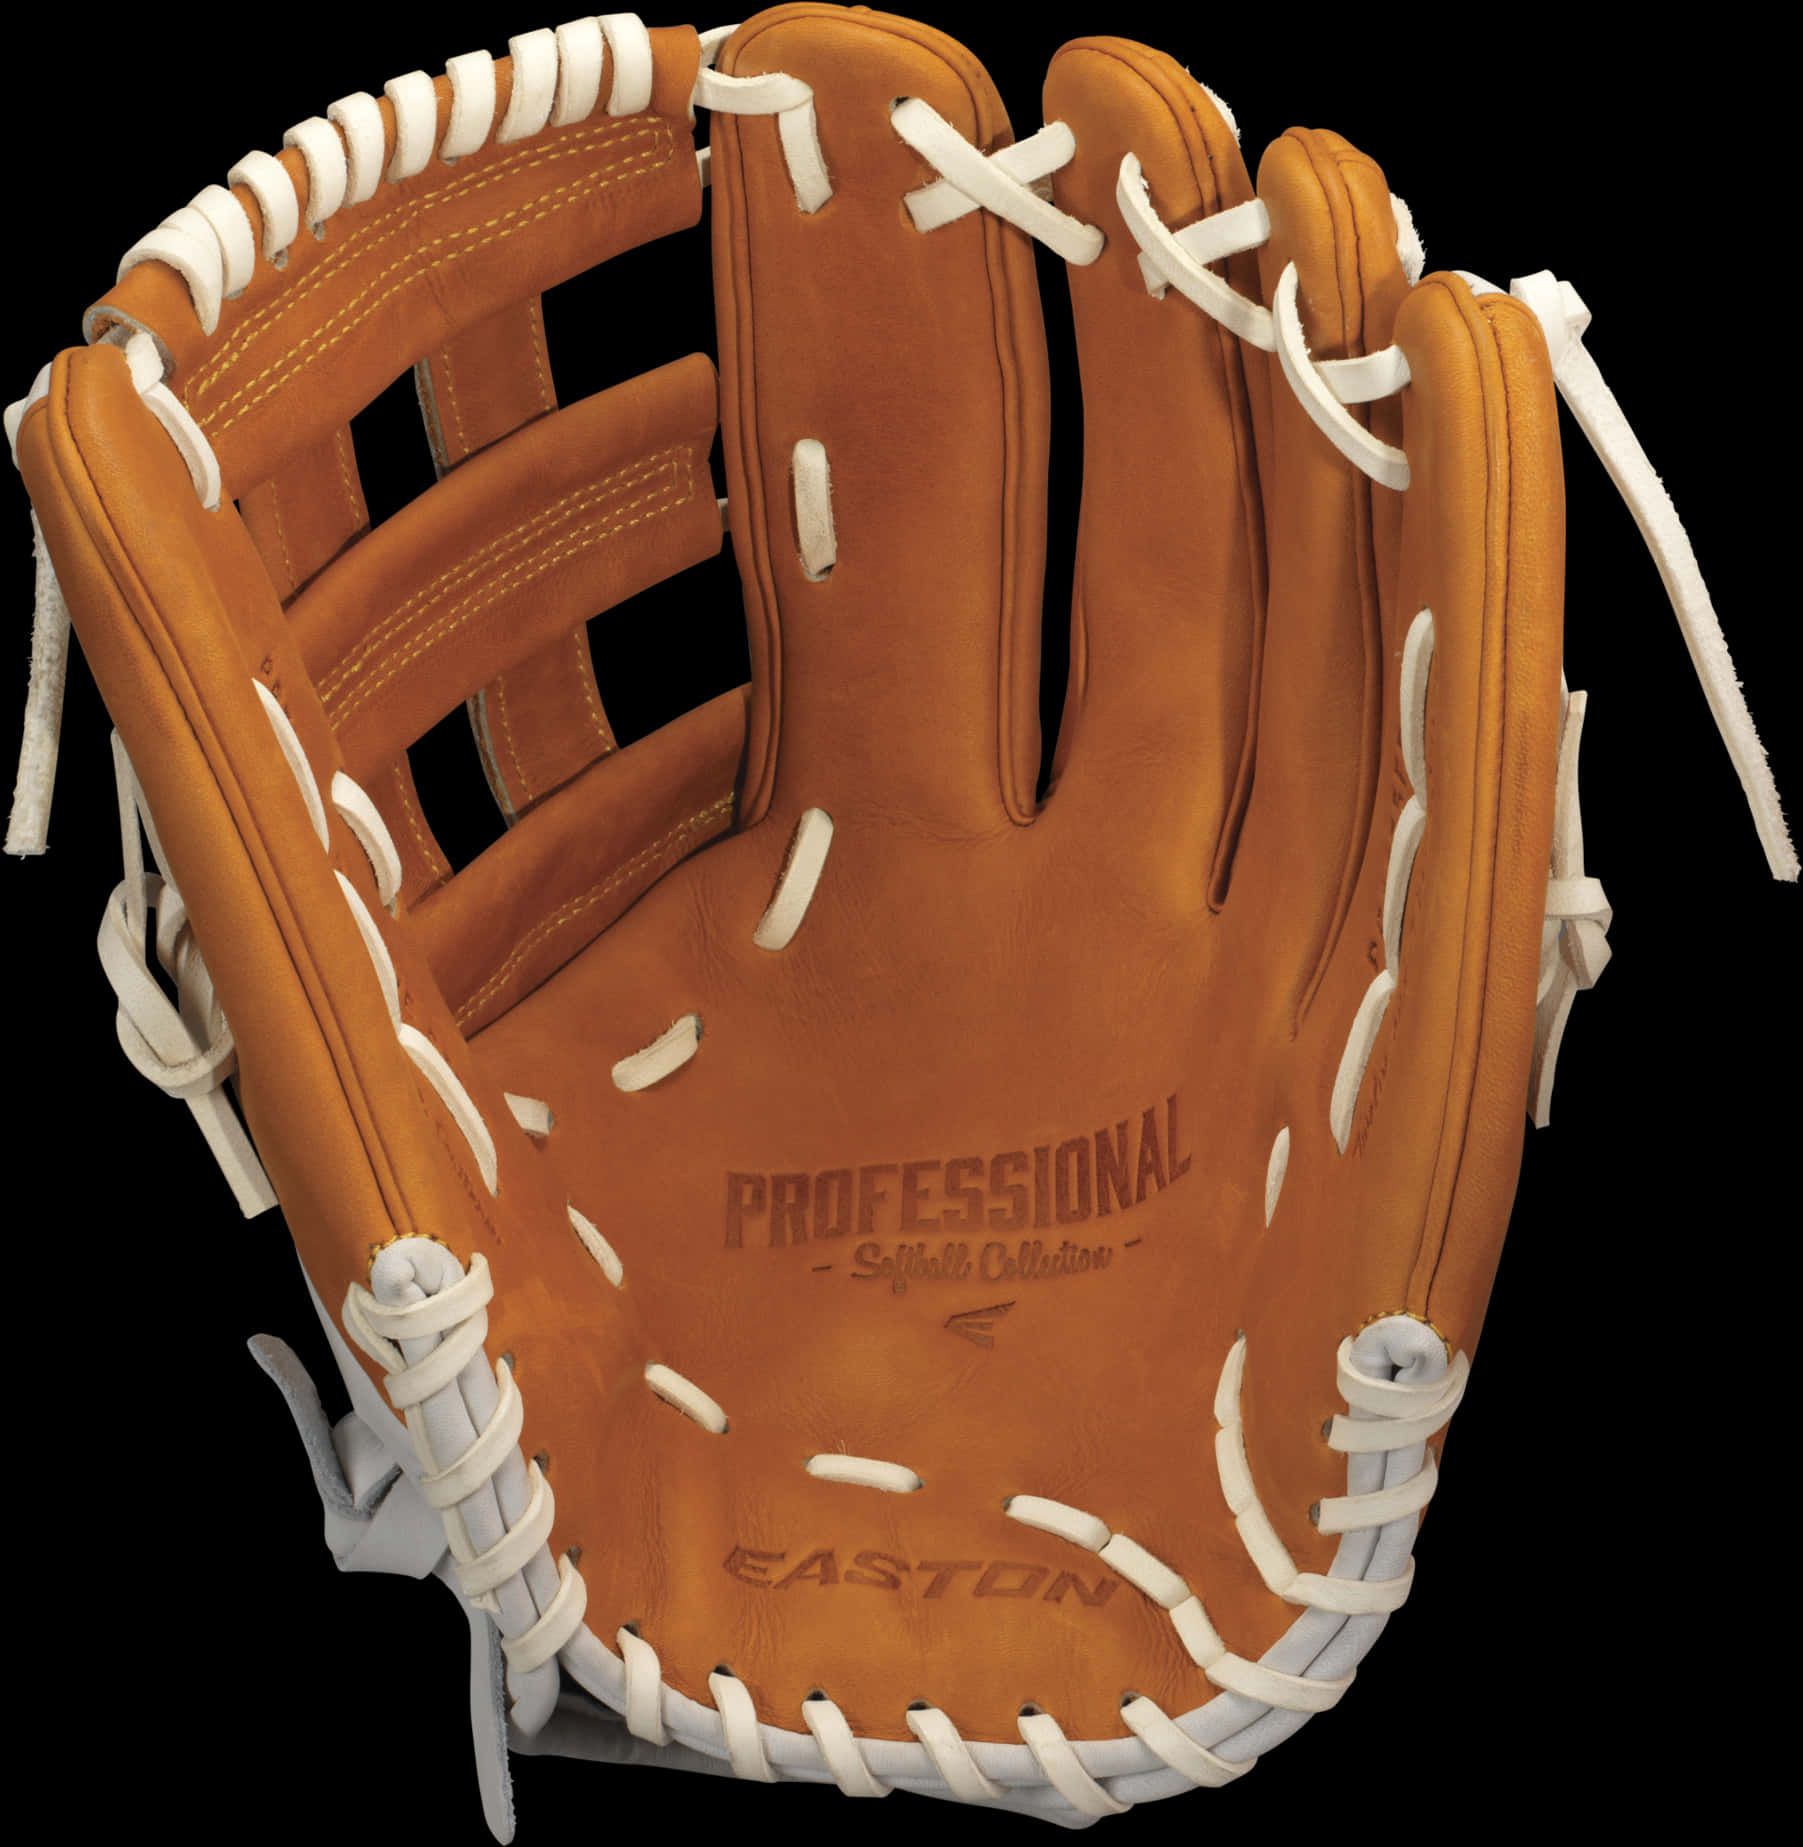 Professional Easton Baseball Glove PNG